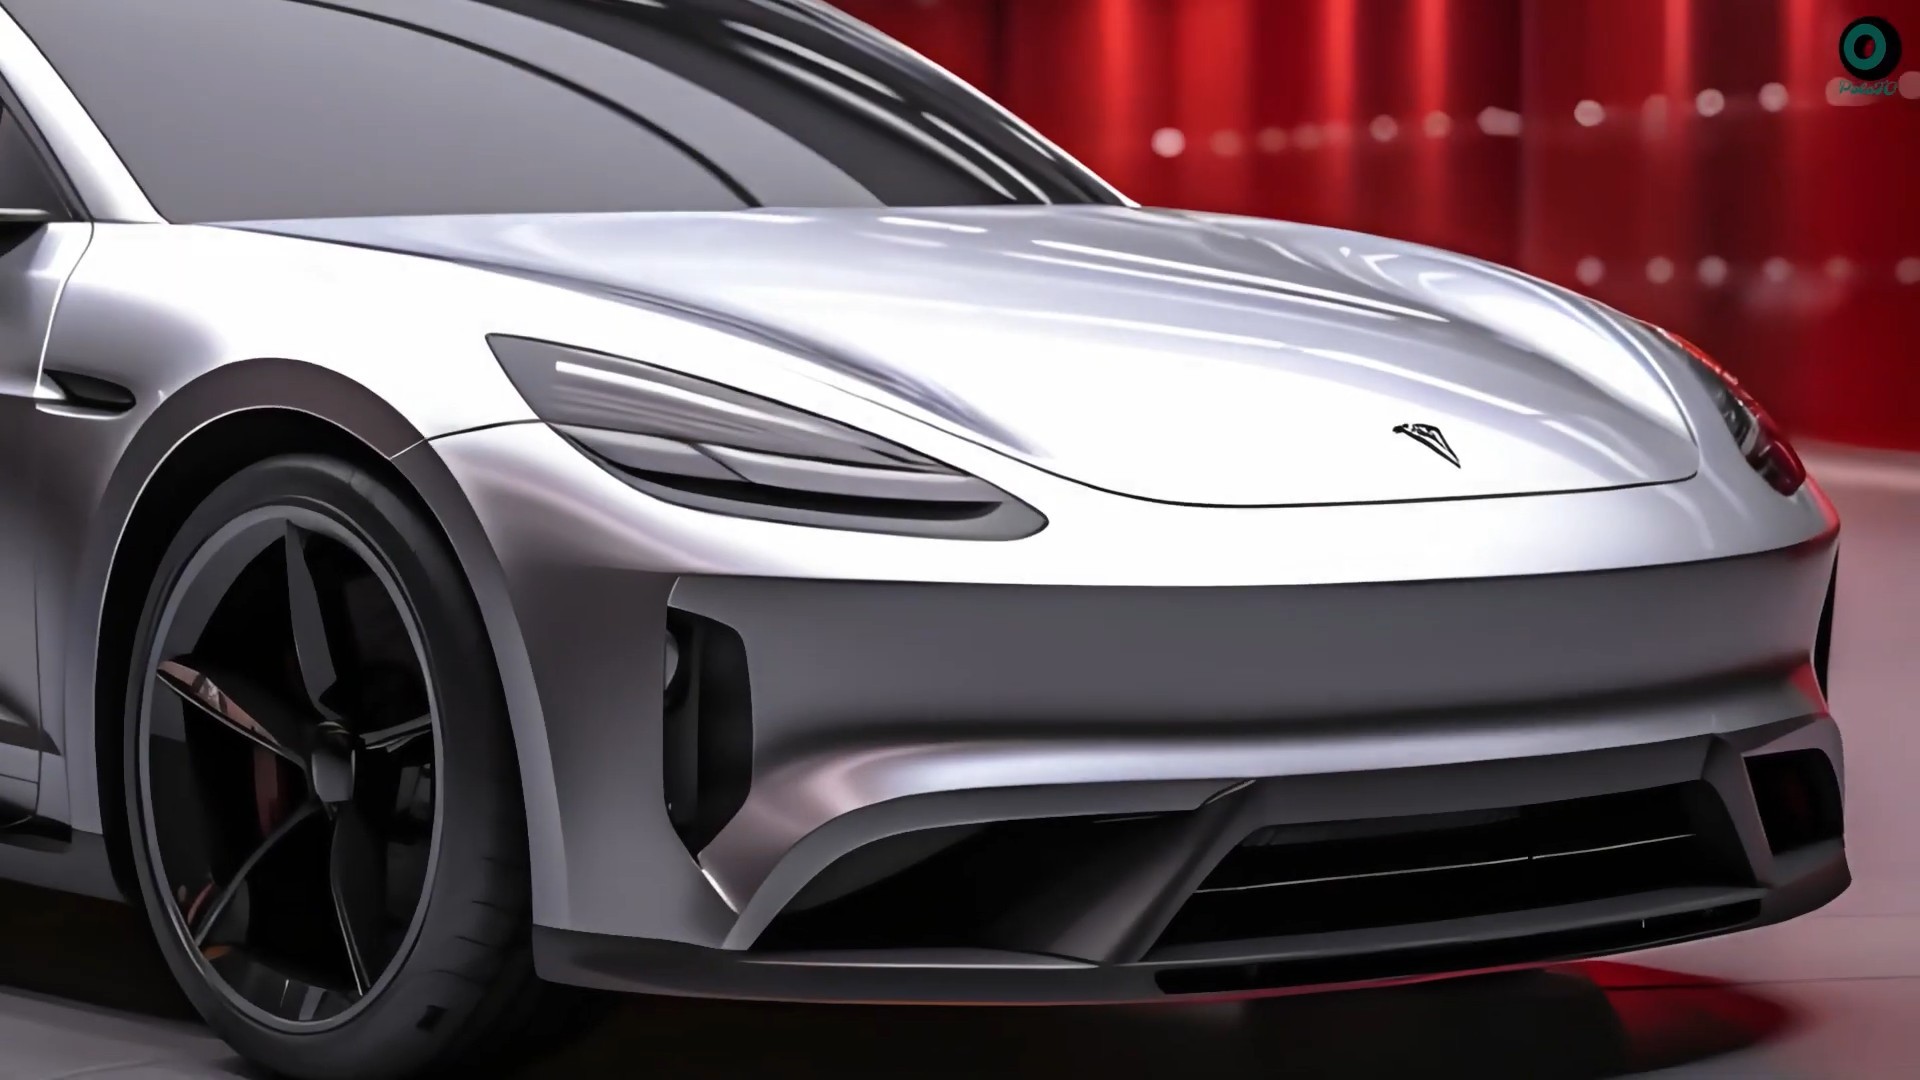 Revealed 2025 Tesla Model Y 'Juniper' CUV Update Dwells Around Imagination  Land - autoevolution